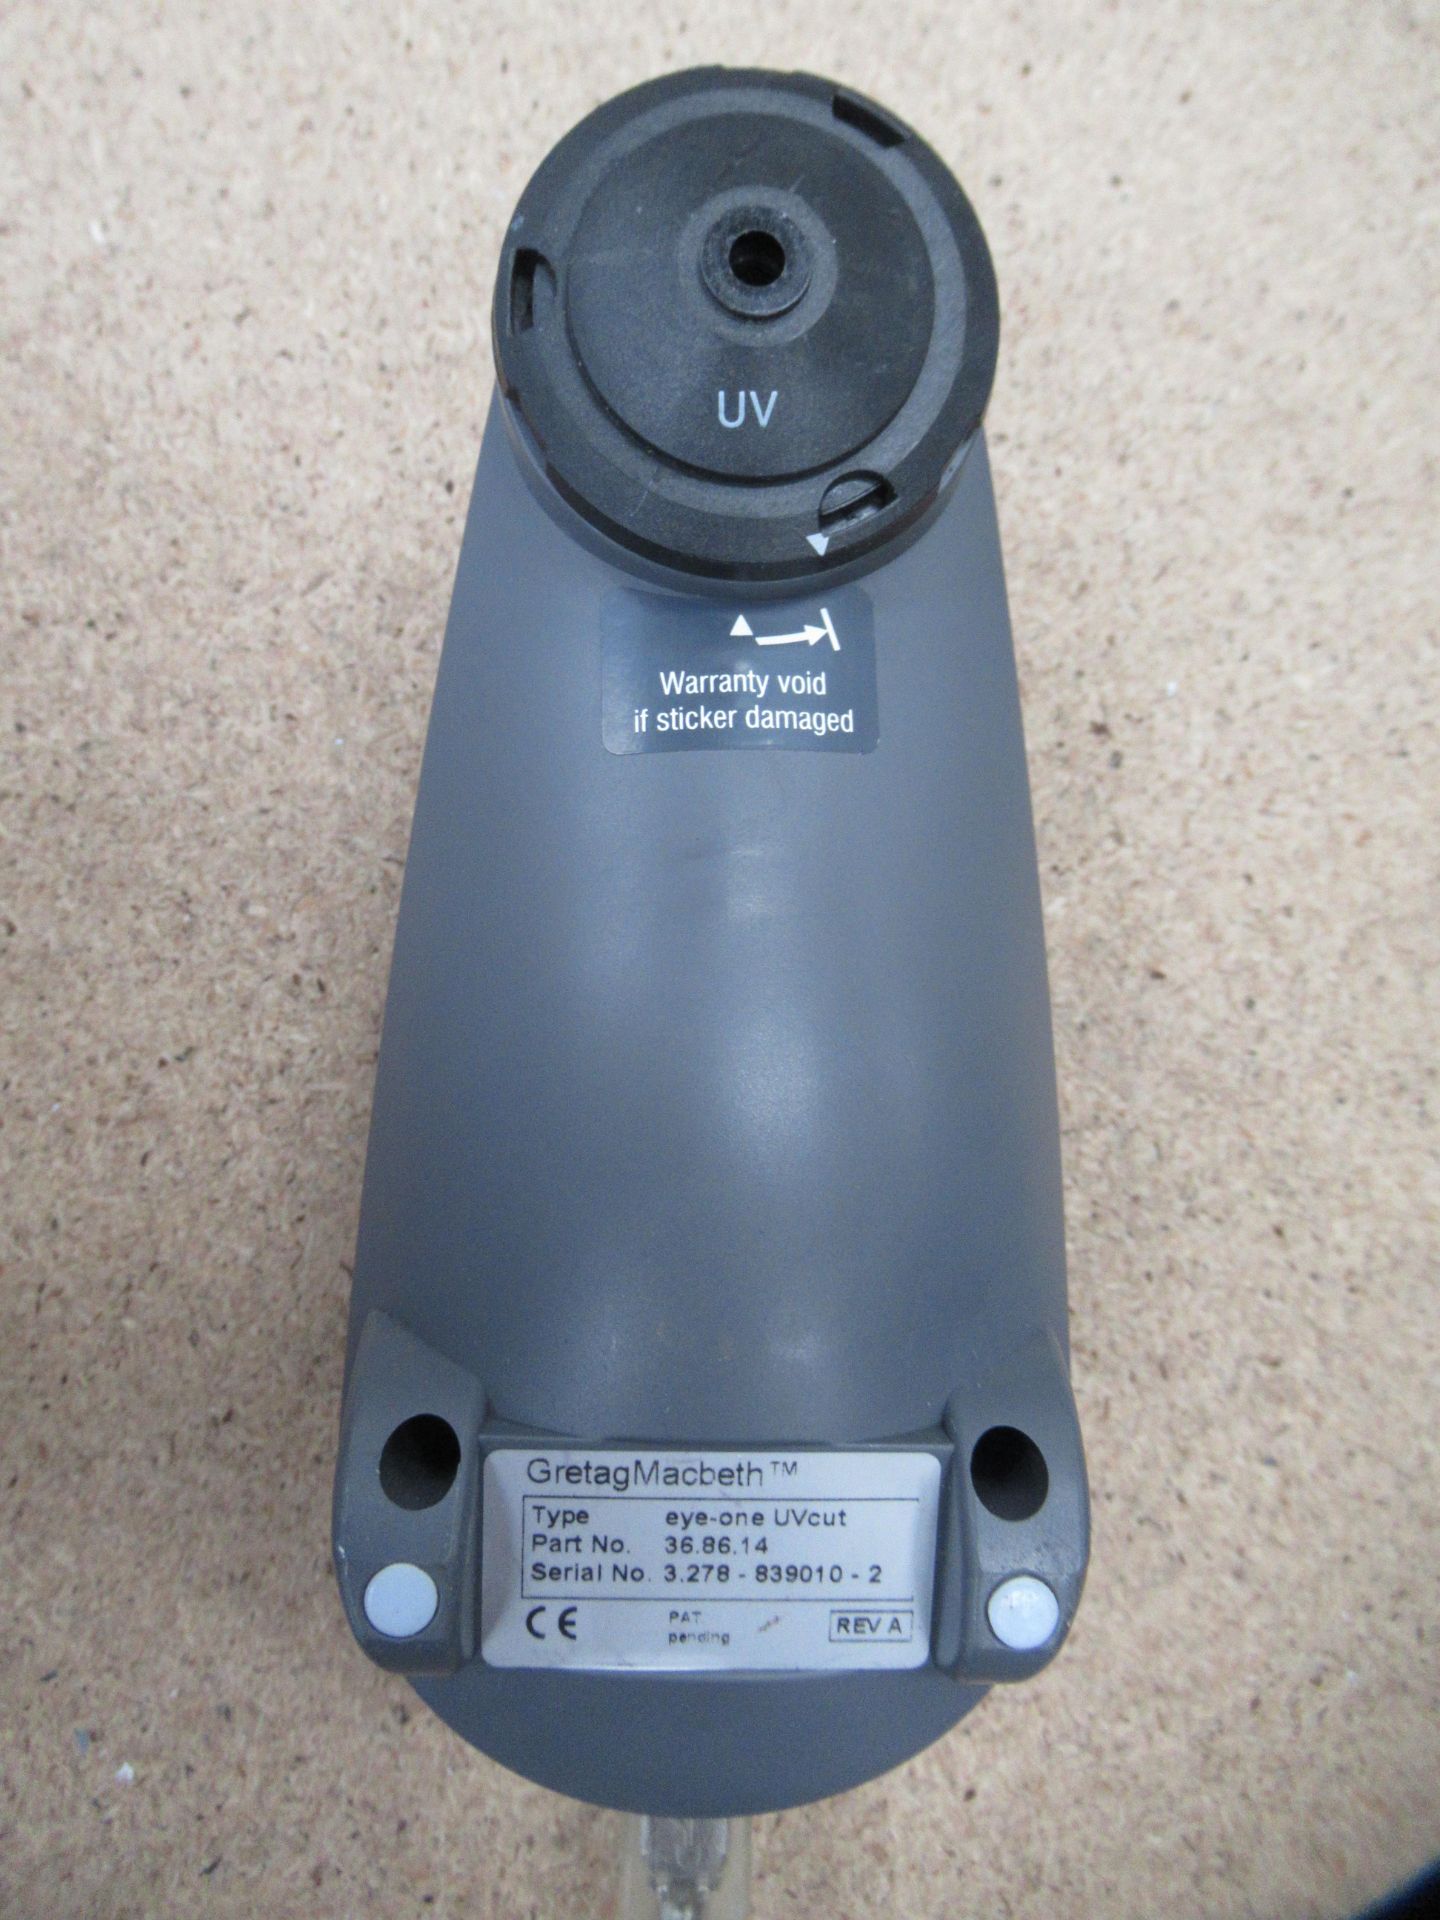 EFI ES-1000 Eye-One UV Cut Spectrophotometer - Image 4 of 6